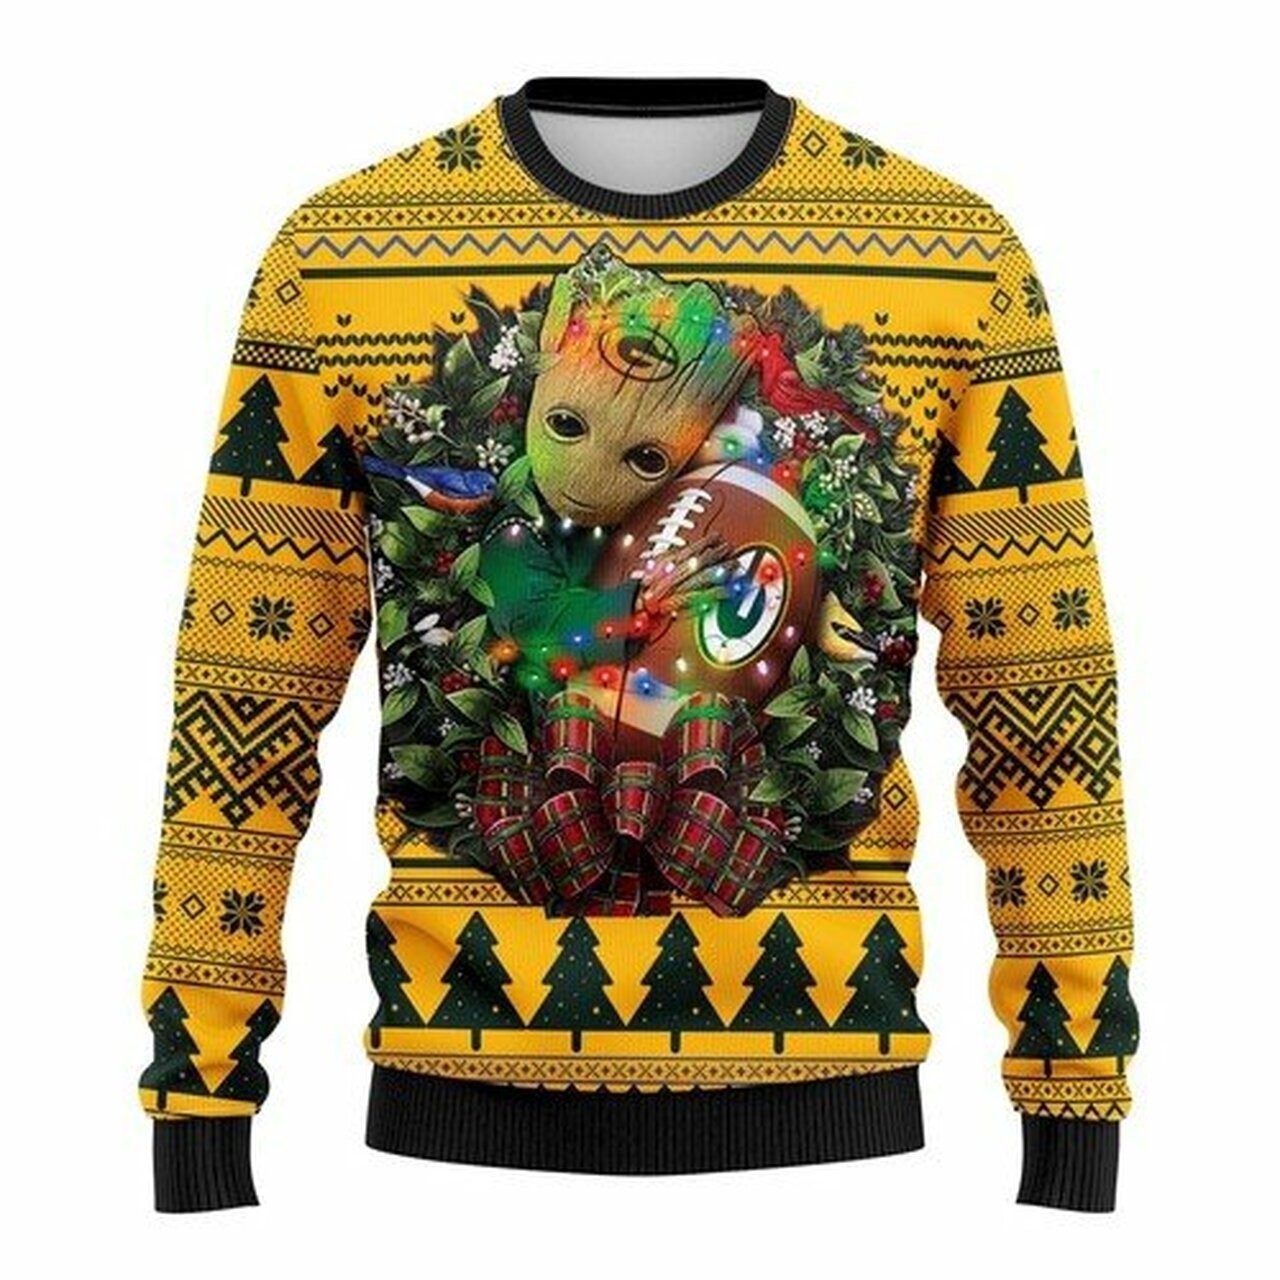 NFL Green Bay Packers Groot hug ugly christmas sweater